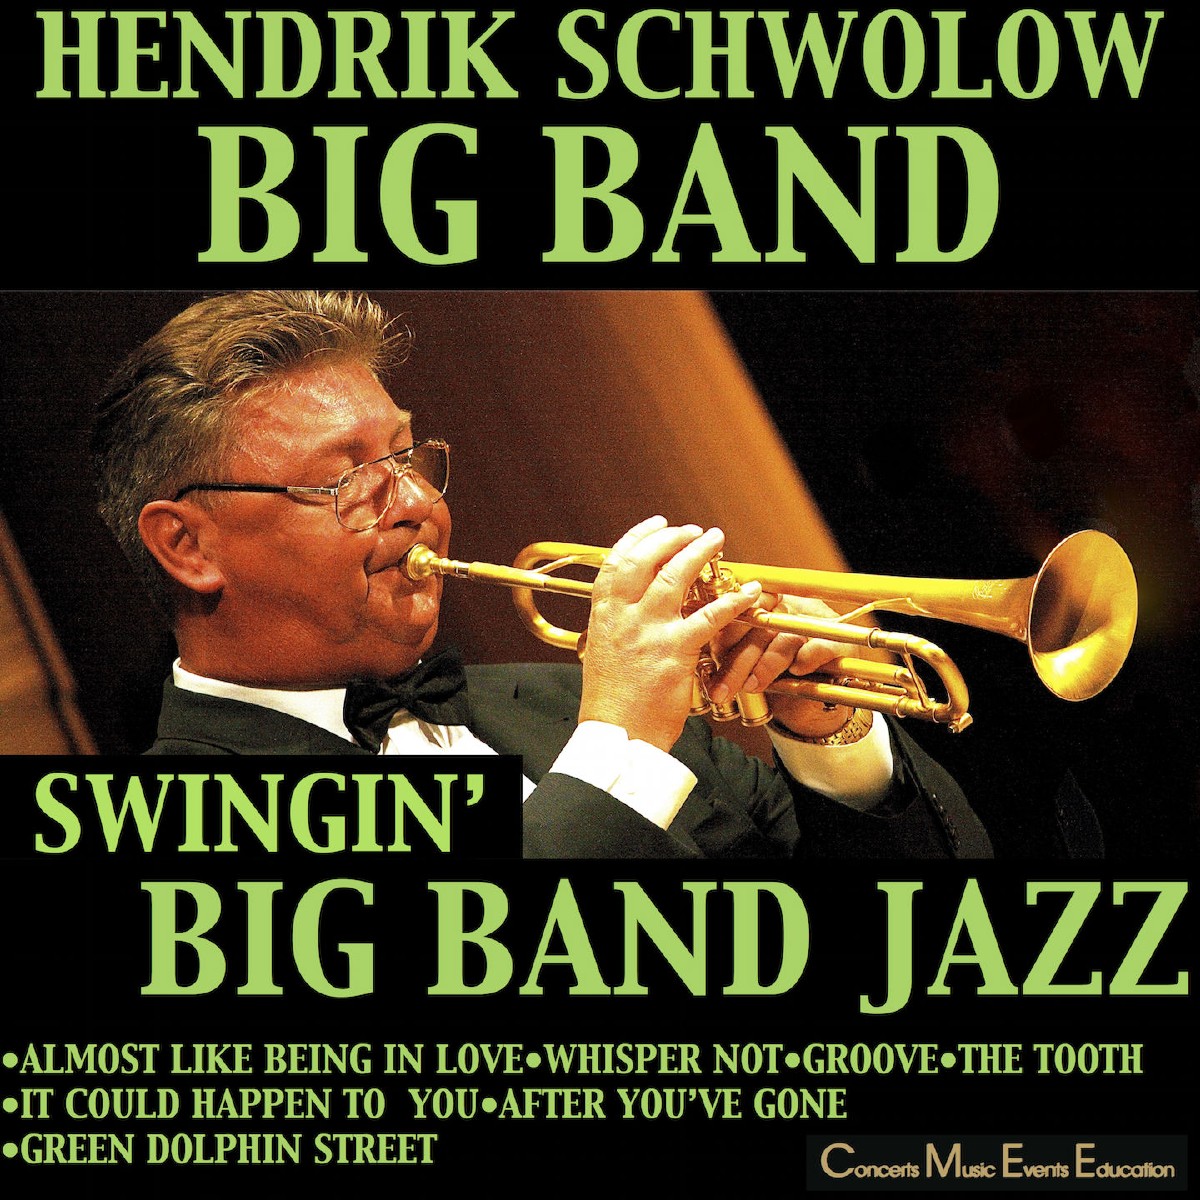 Hendrik Schwolow Big Band Jazz